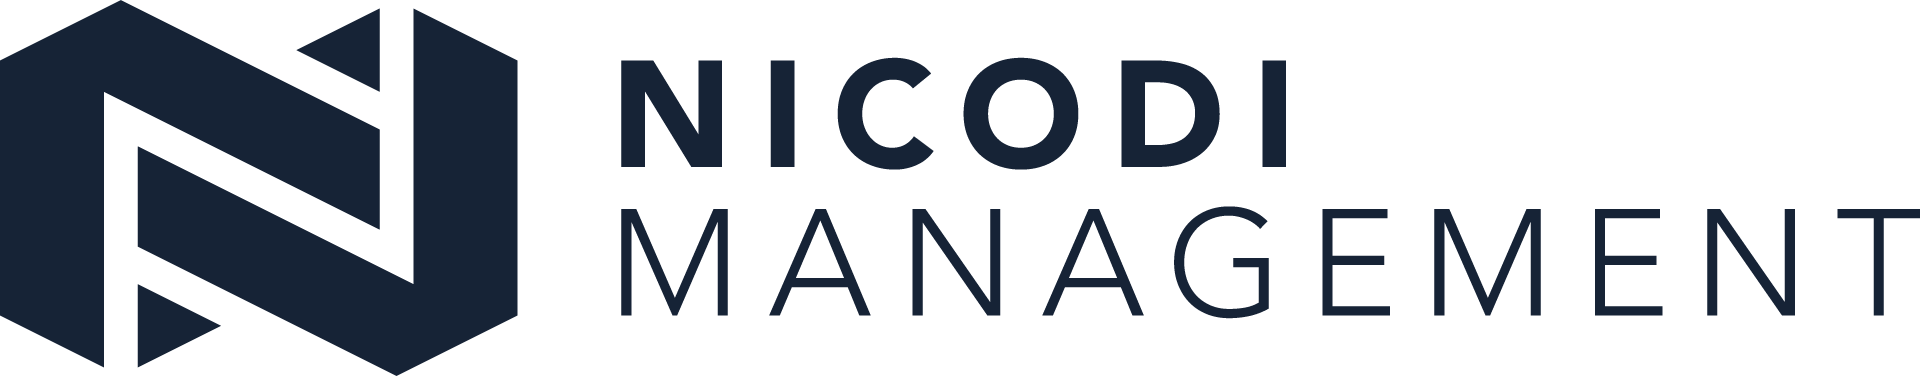 Nicodi Management logo